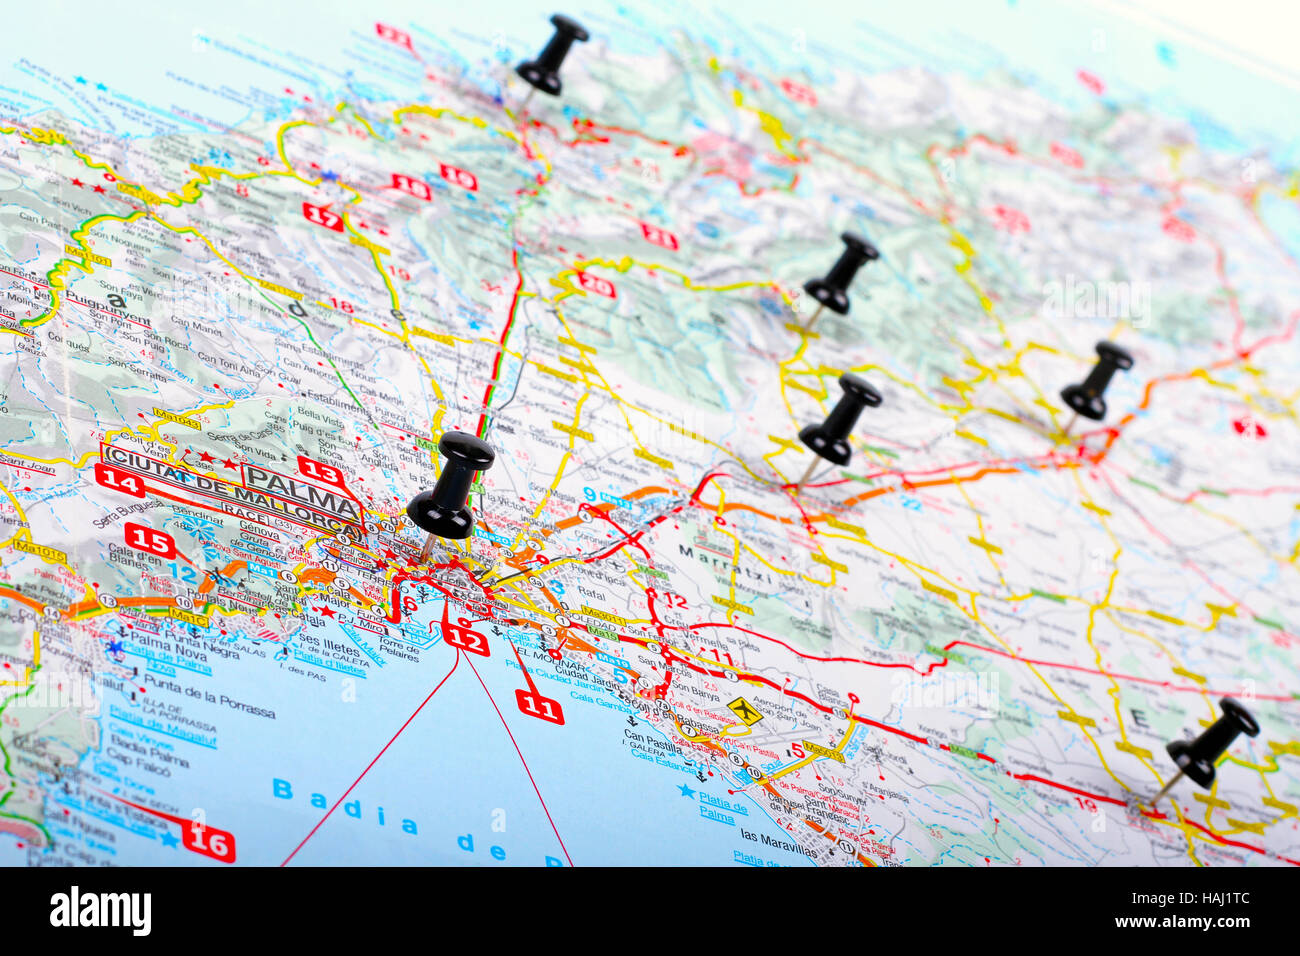 pushpins shows destination points on a map Stock Photo